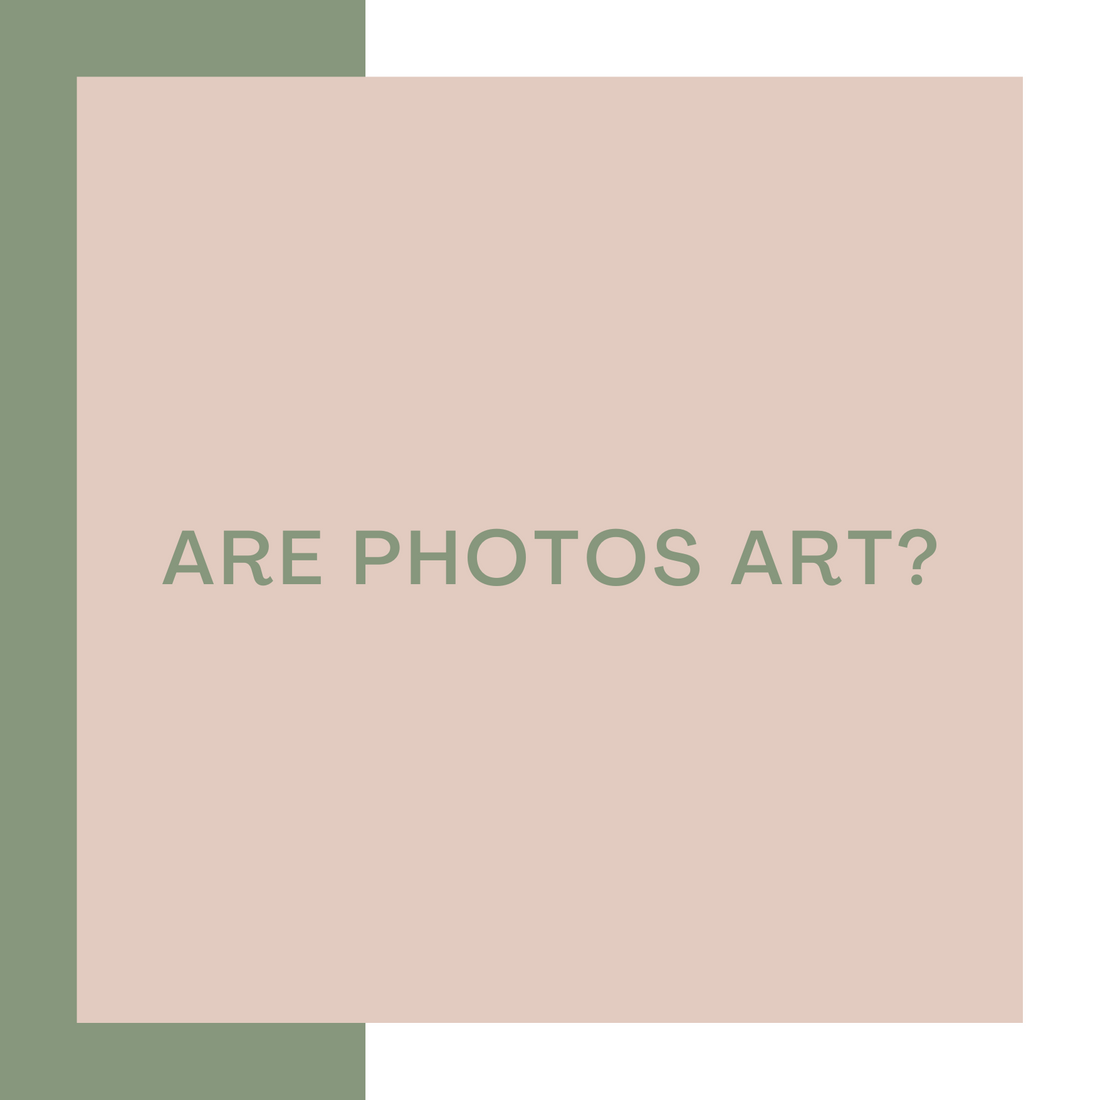 Are photos art?